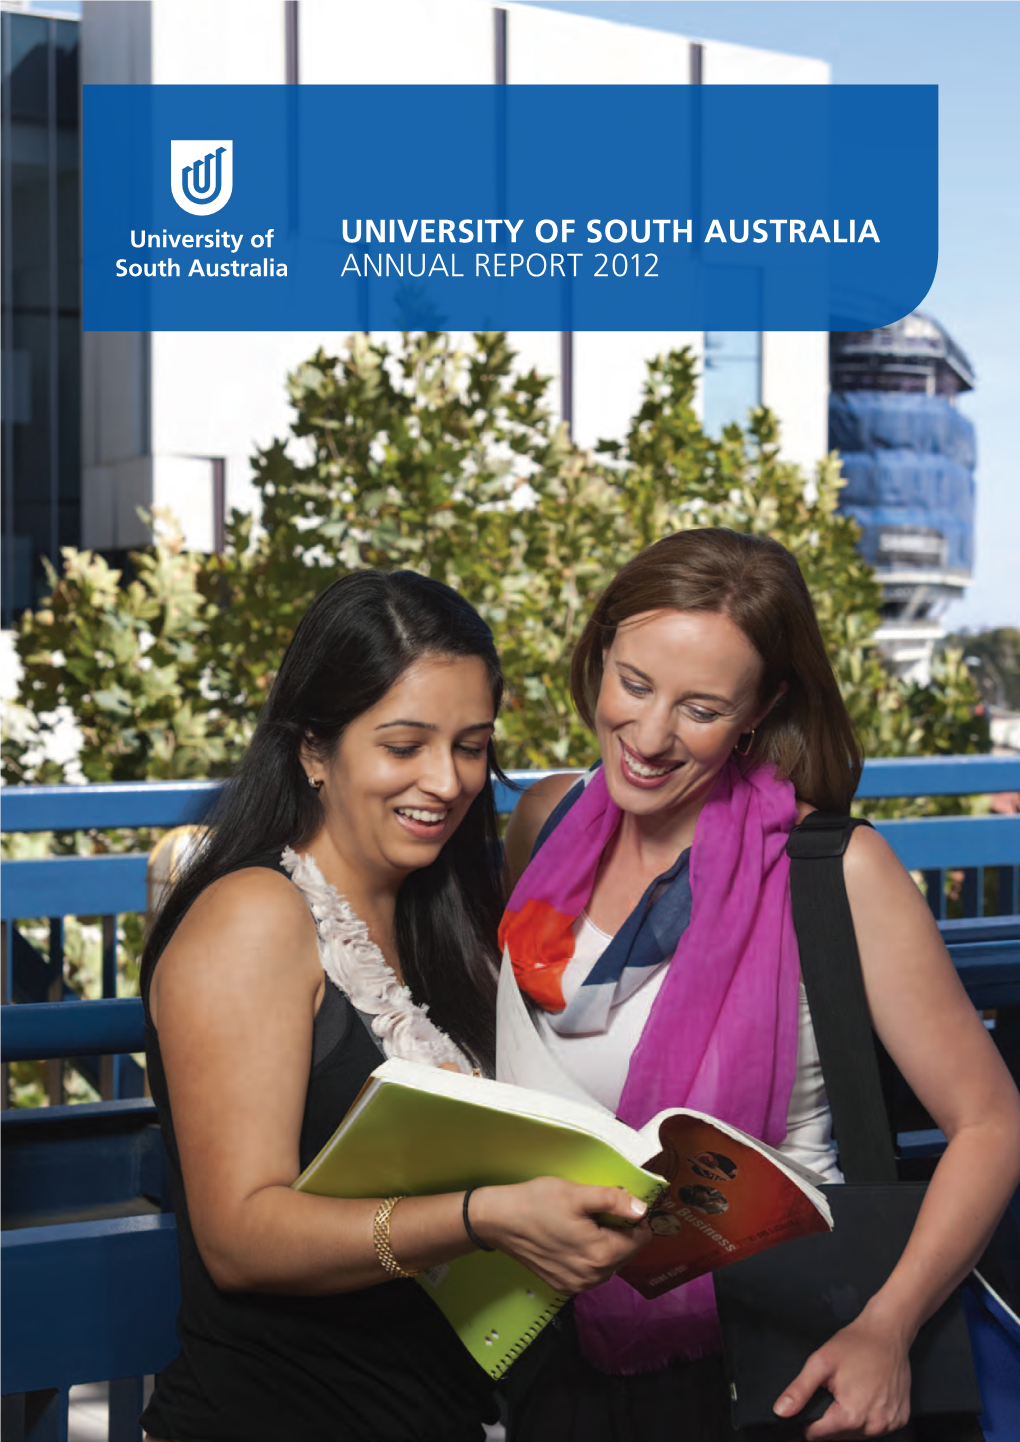 University of South Australia Annual Report 2012University of South Australia Annual Report